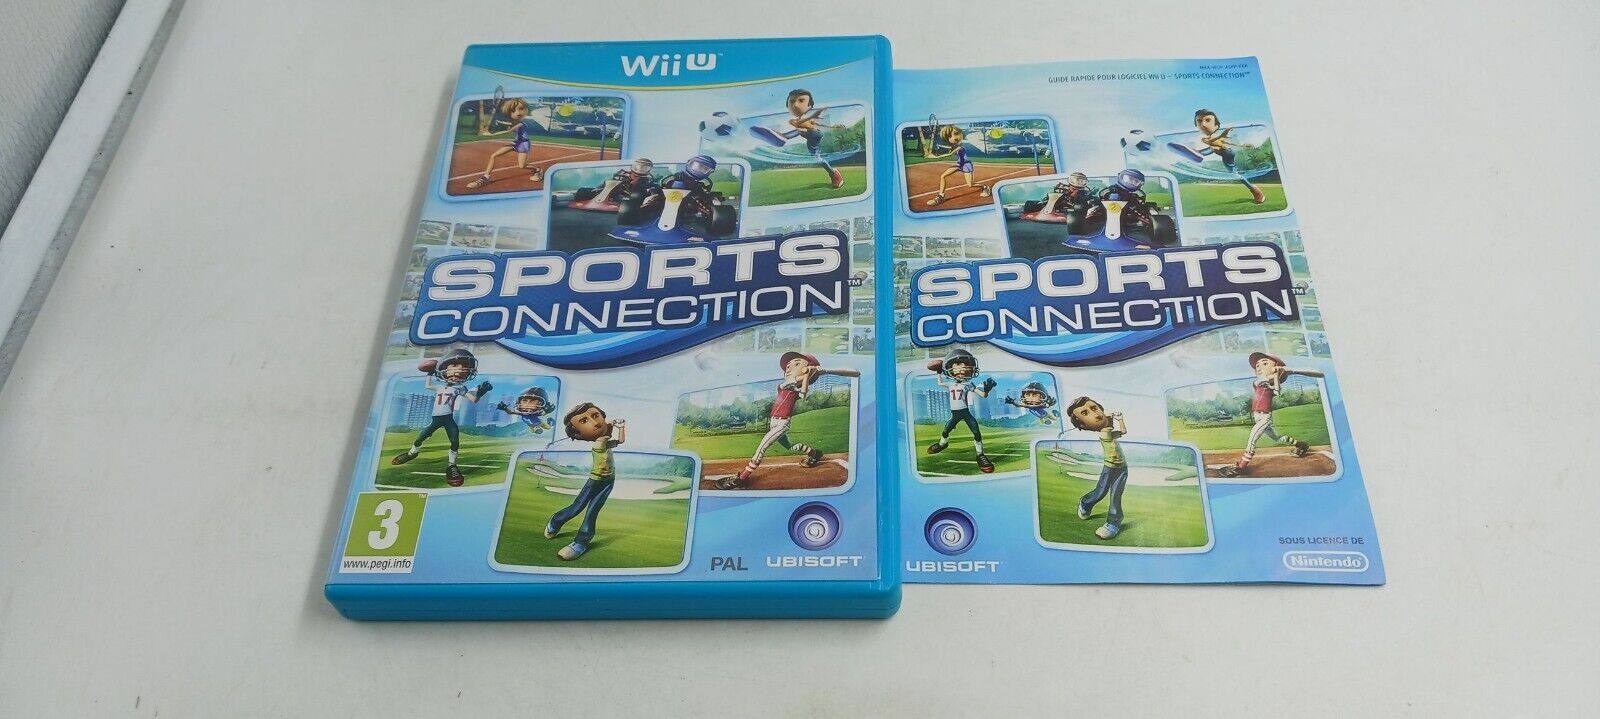 [BOITE VIDE] Nintendo Wii U WiiU Sports Connection